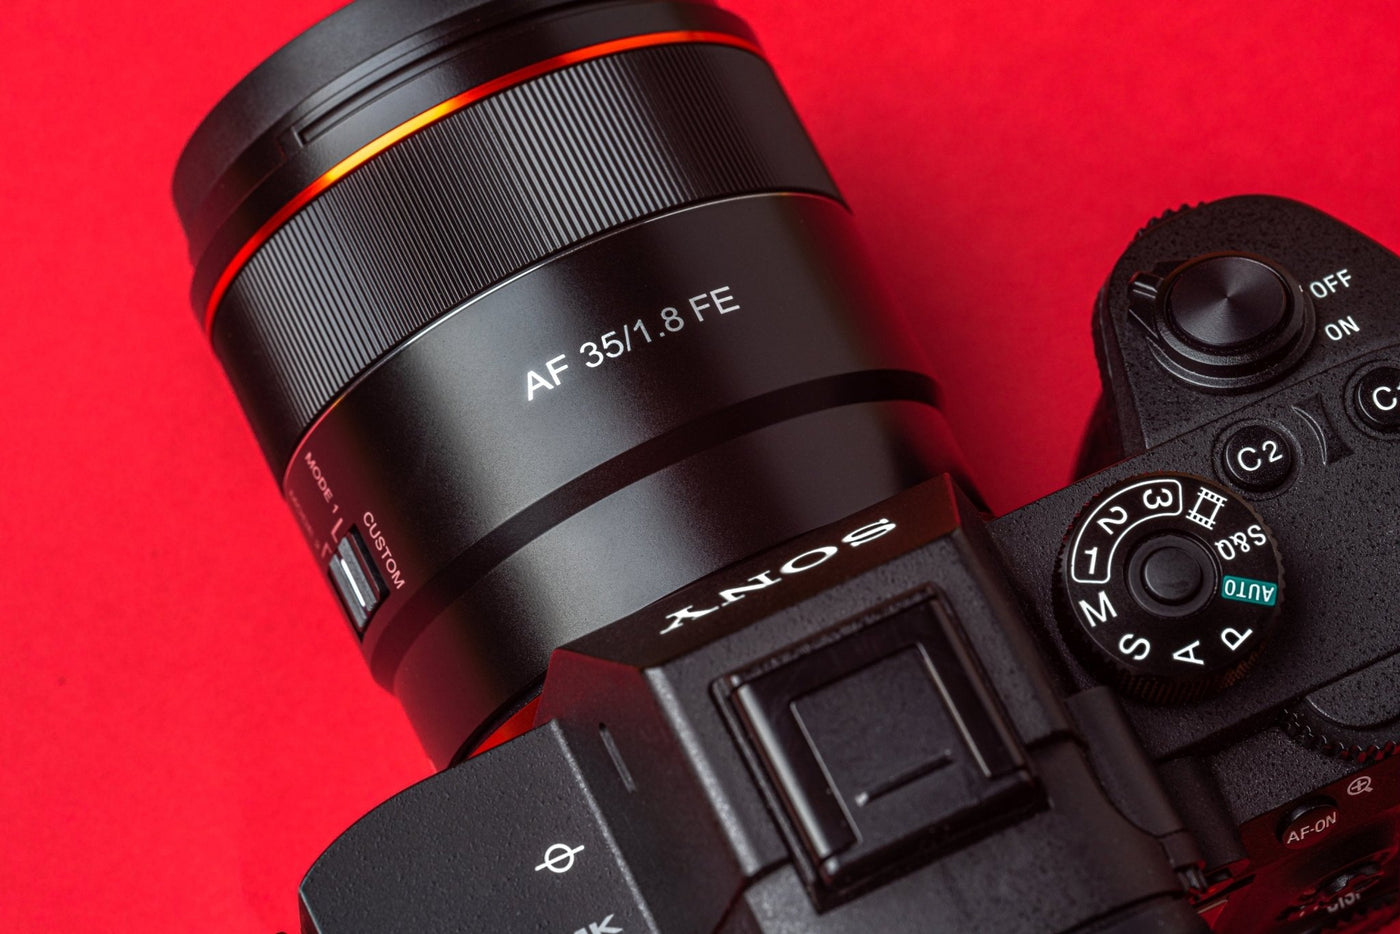 35mm F1.8 AF Compact Full Frame Wide Angle (Sony E) - Rokinon Lenses - IO3518-E